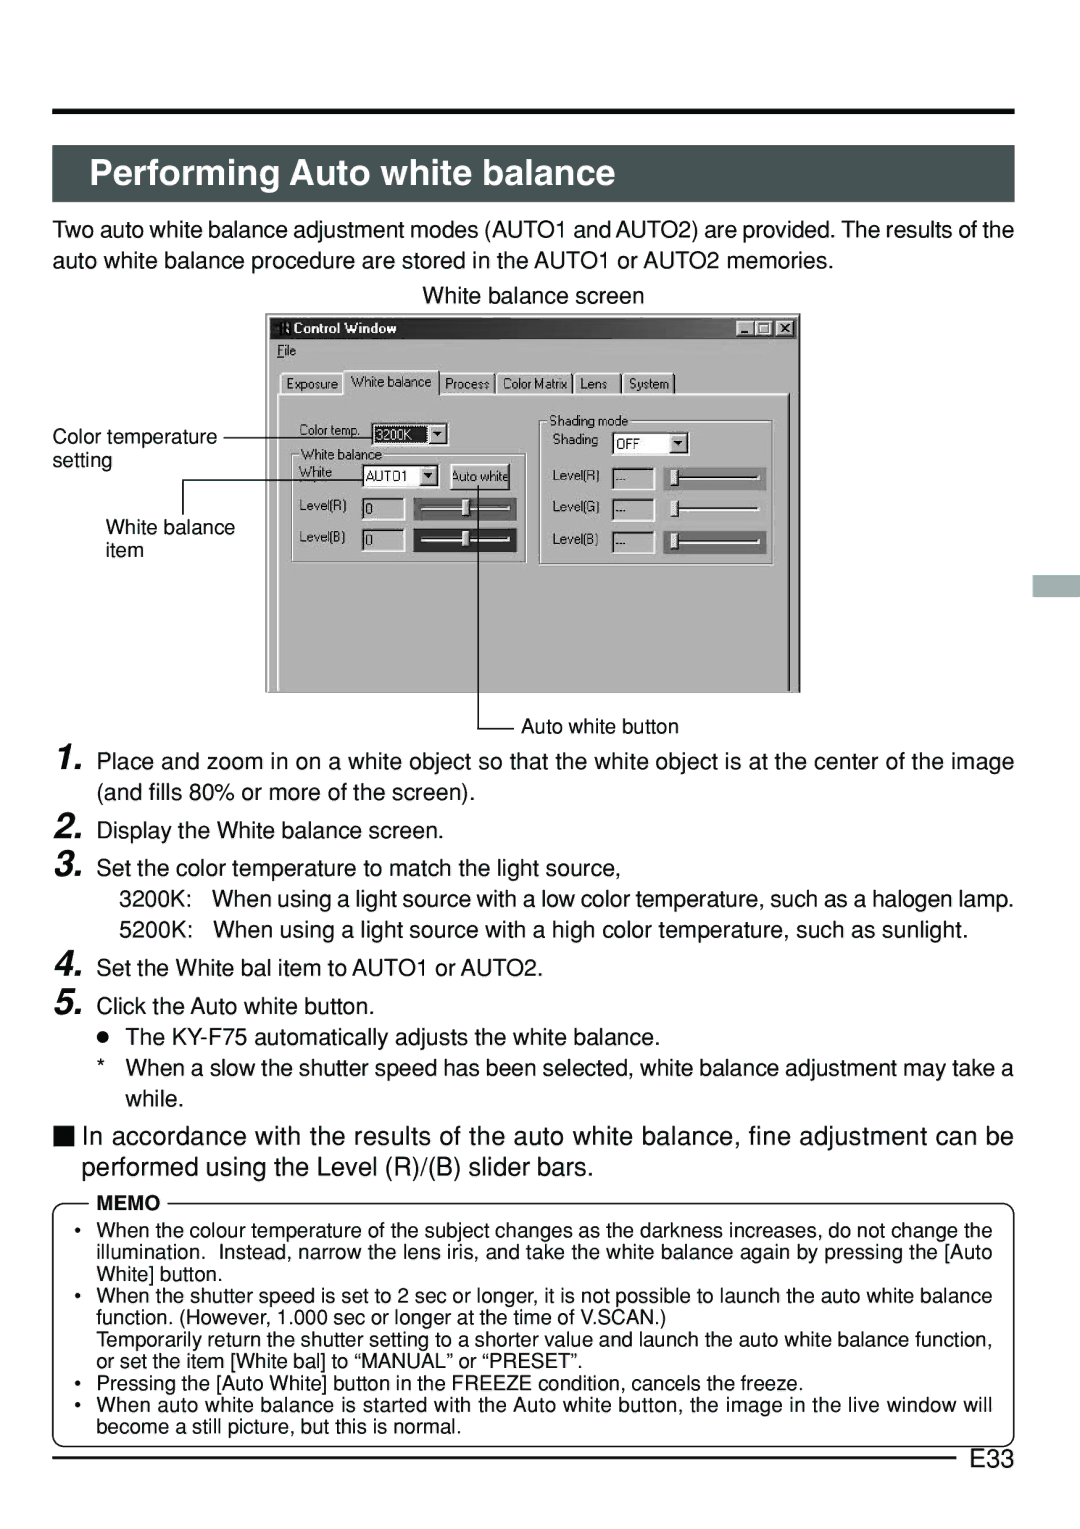 JVC KY-F75 manual Performing Auto white balance, E33 